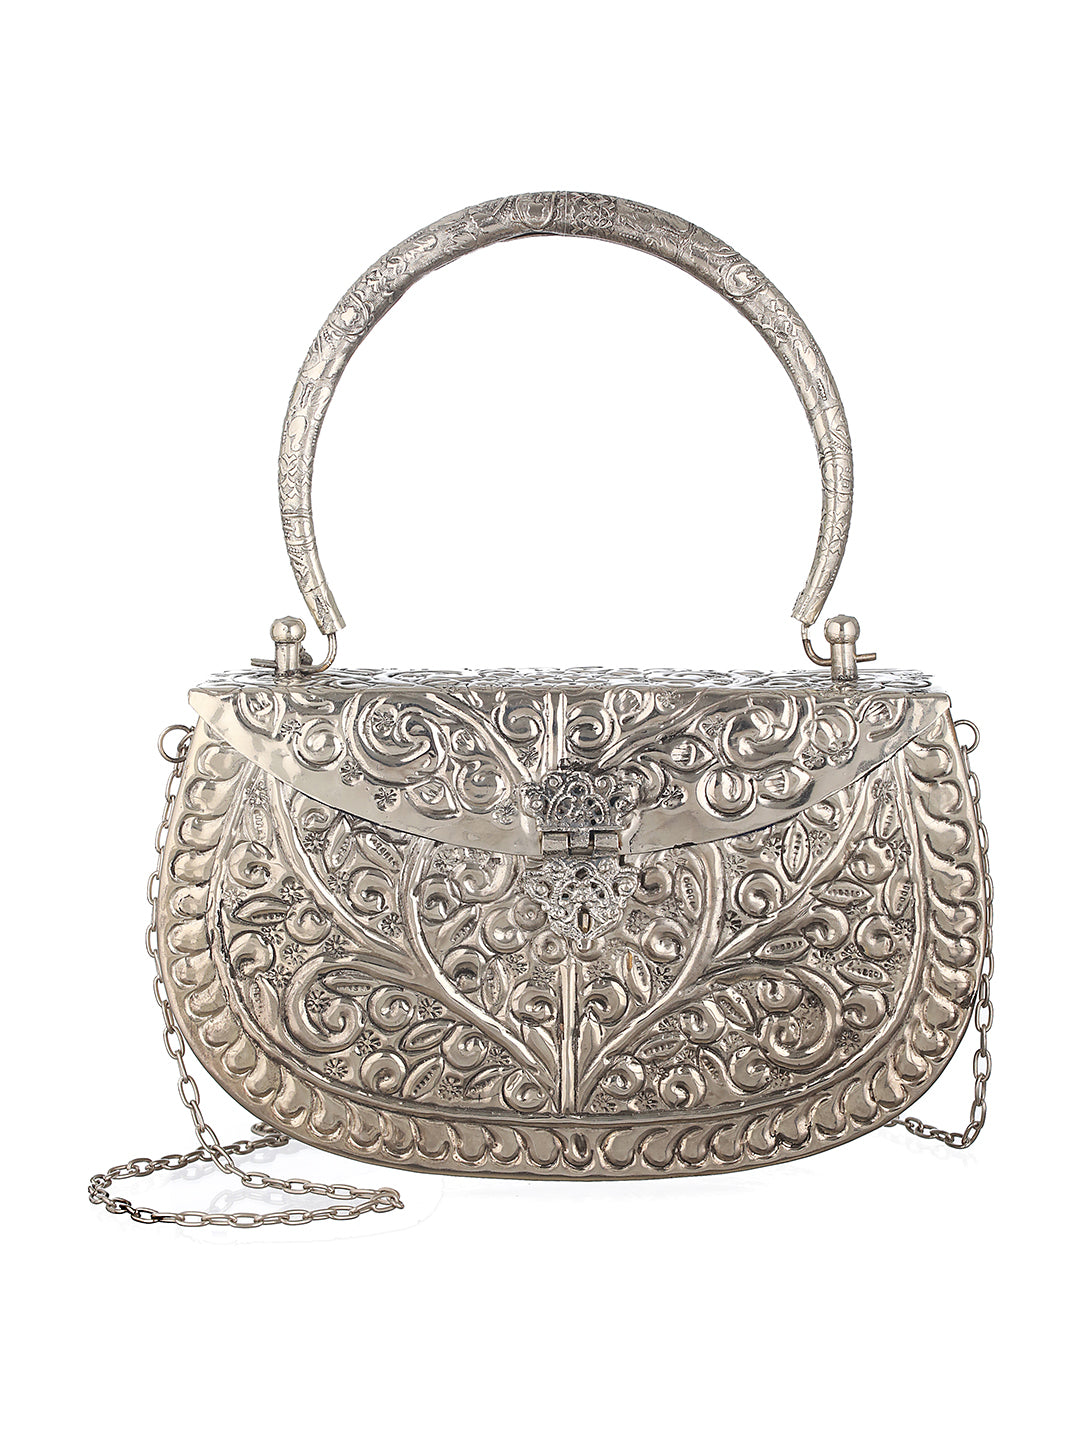 Starlet Silver Crystal Iridescent Evening Handbag Chain Shoulder Clutch  Purse | eBay